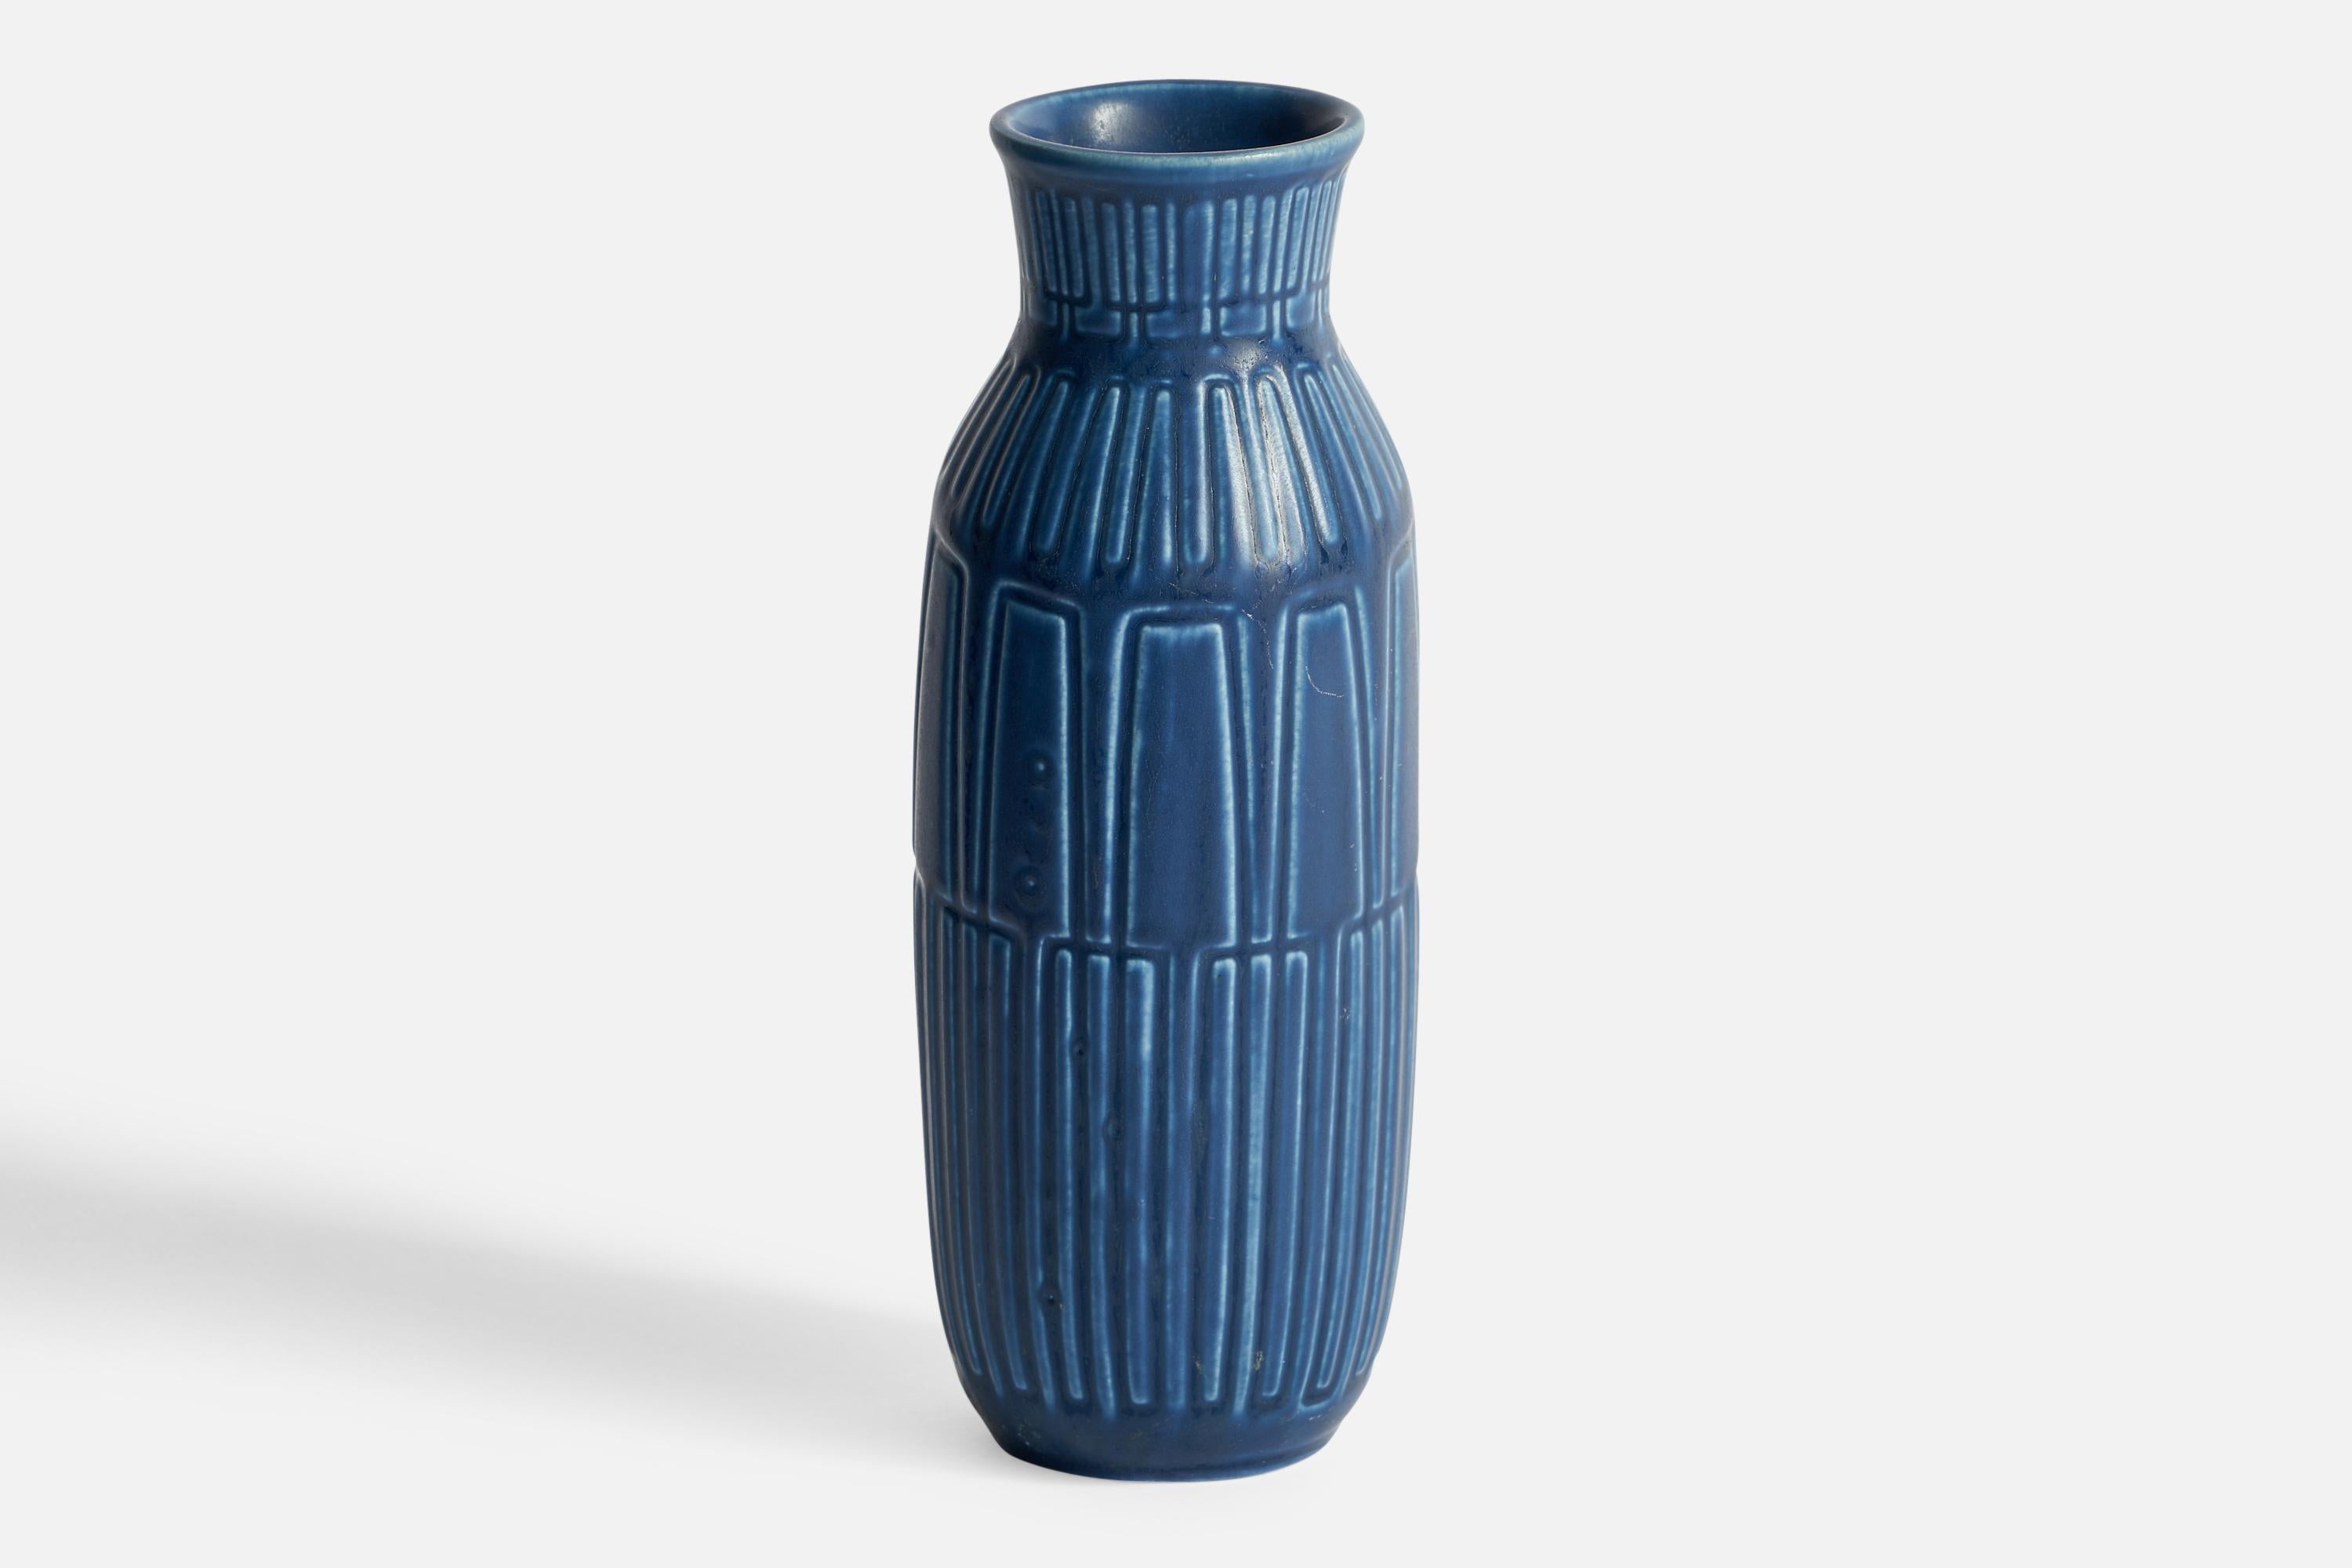 A blue-glazed stoneware vase designed and produced by Peter Ipsens Enke, Denmark, c. 1940s.